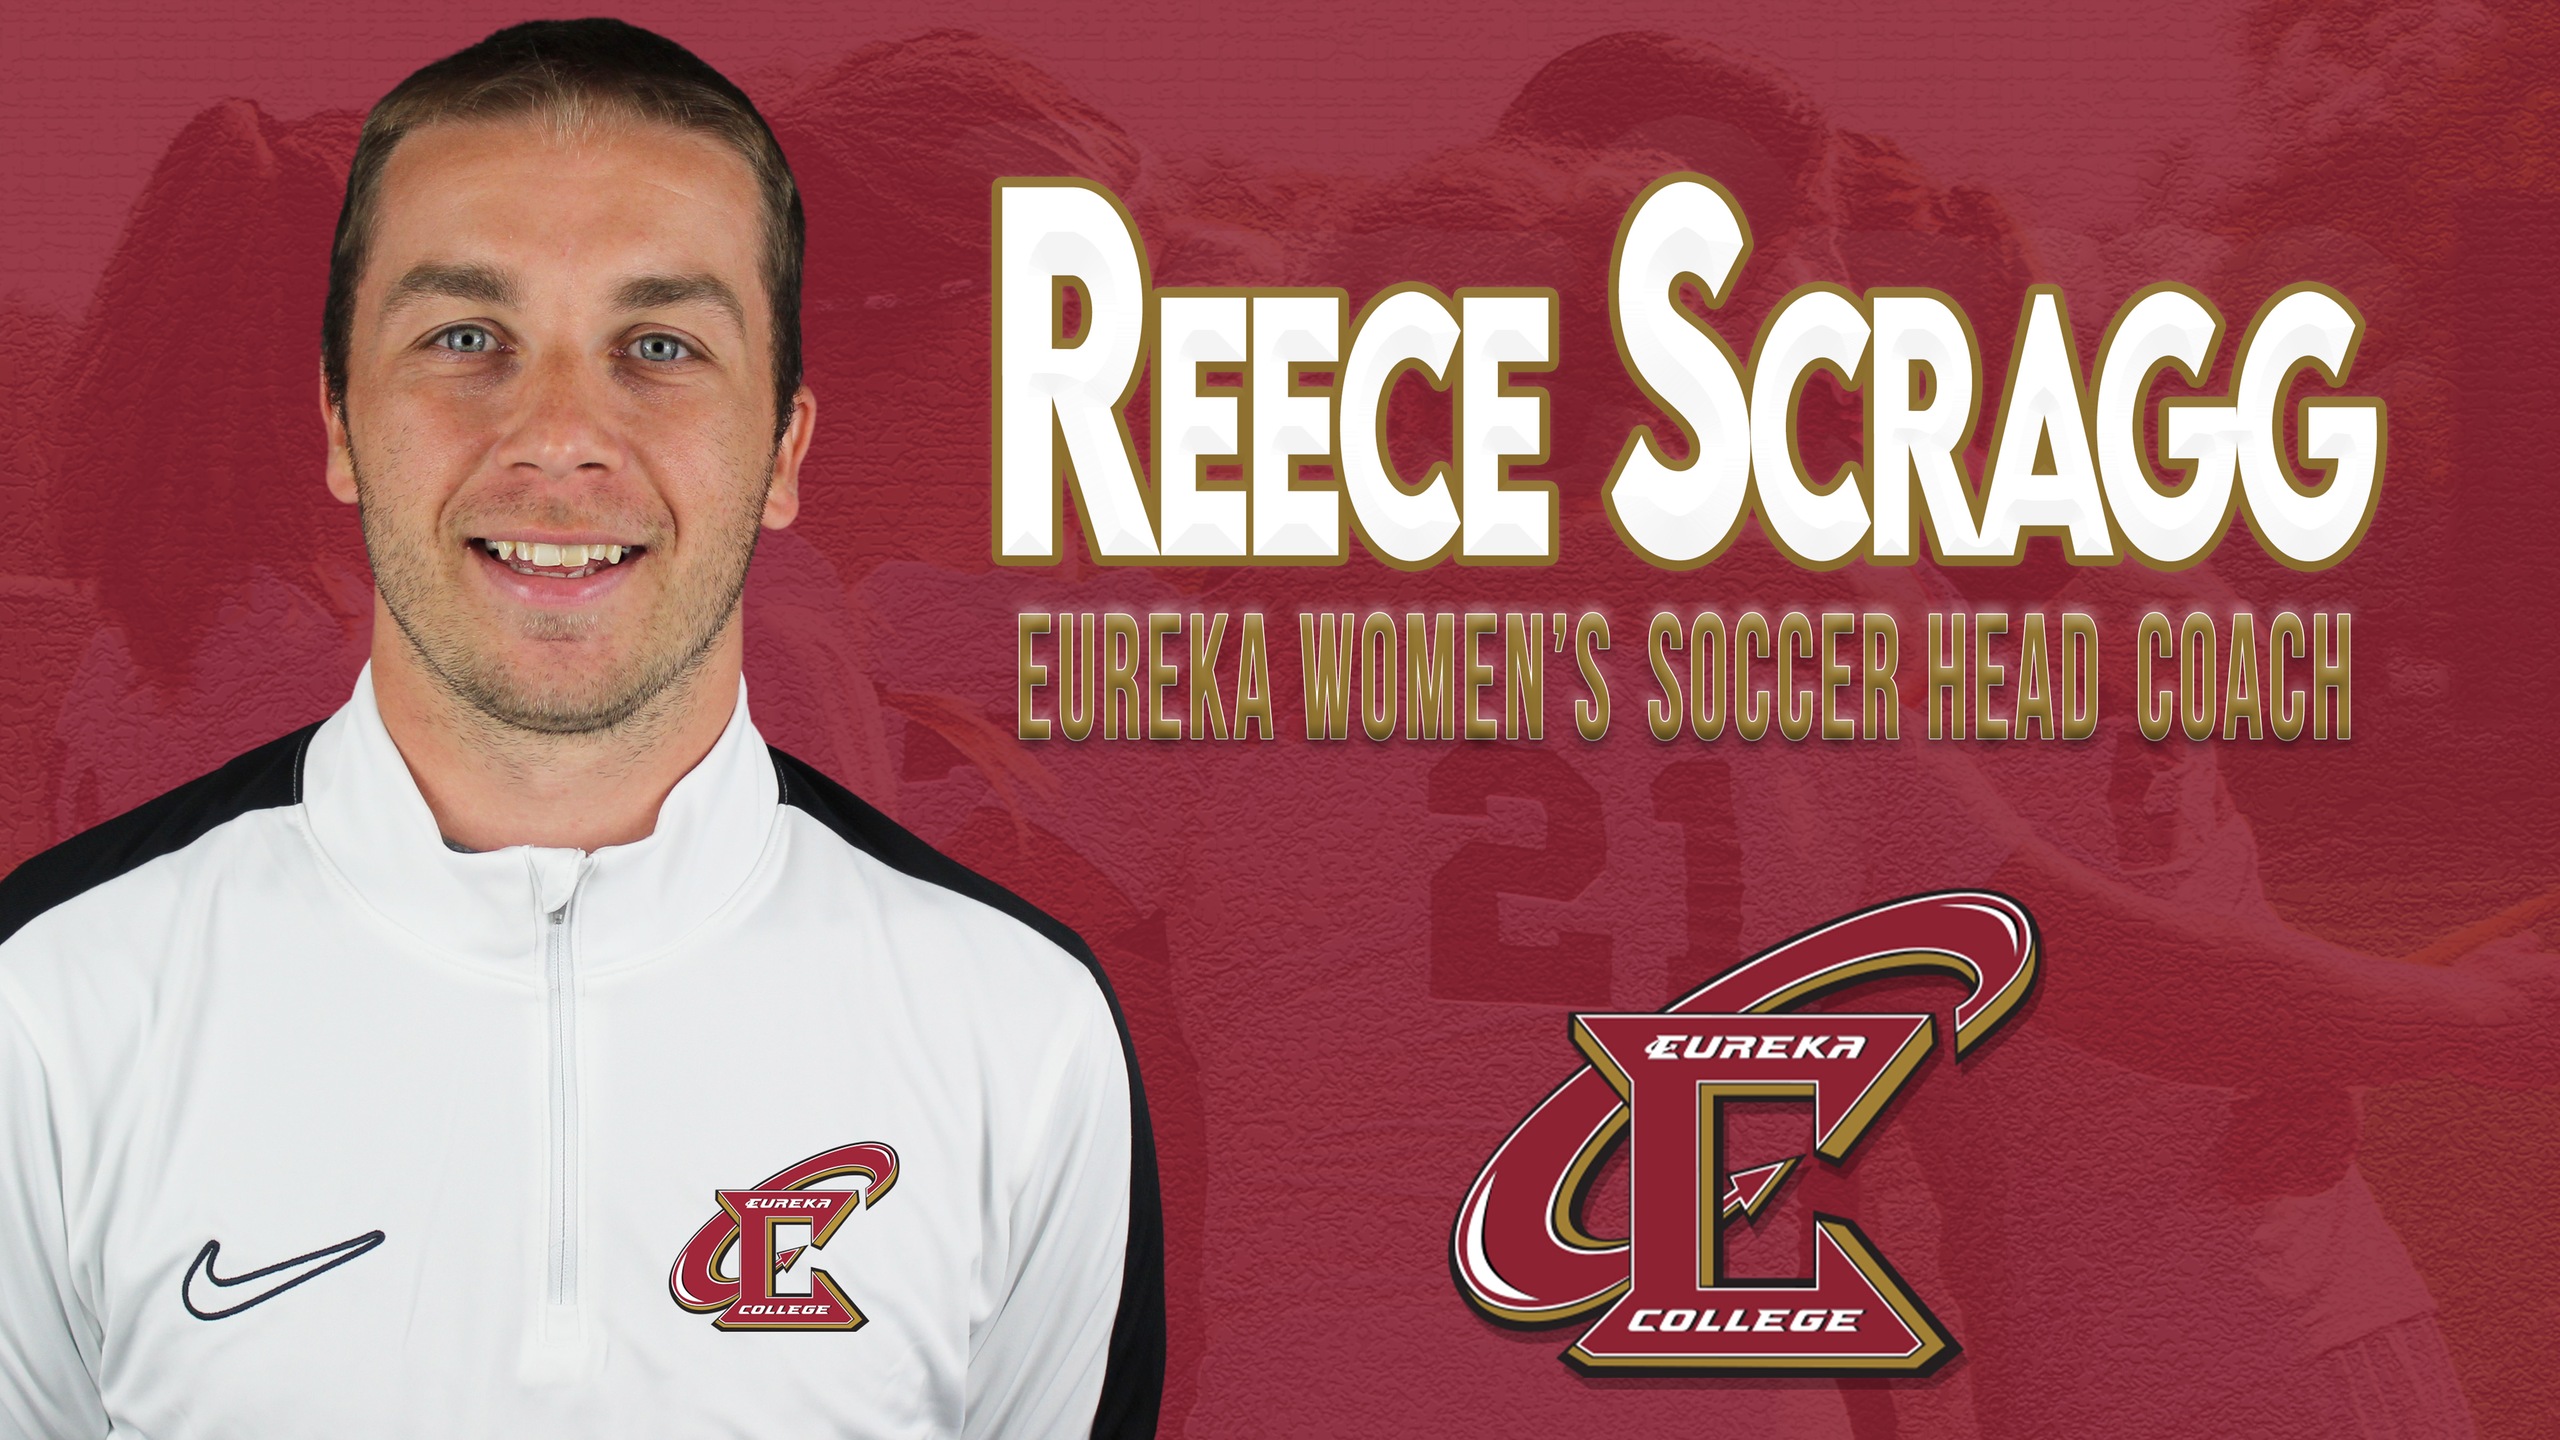 Reece Scragg Named Eureka College Women’s Soccer Head Coach